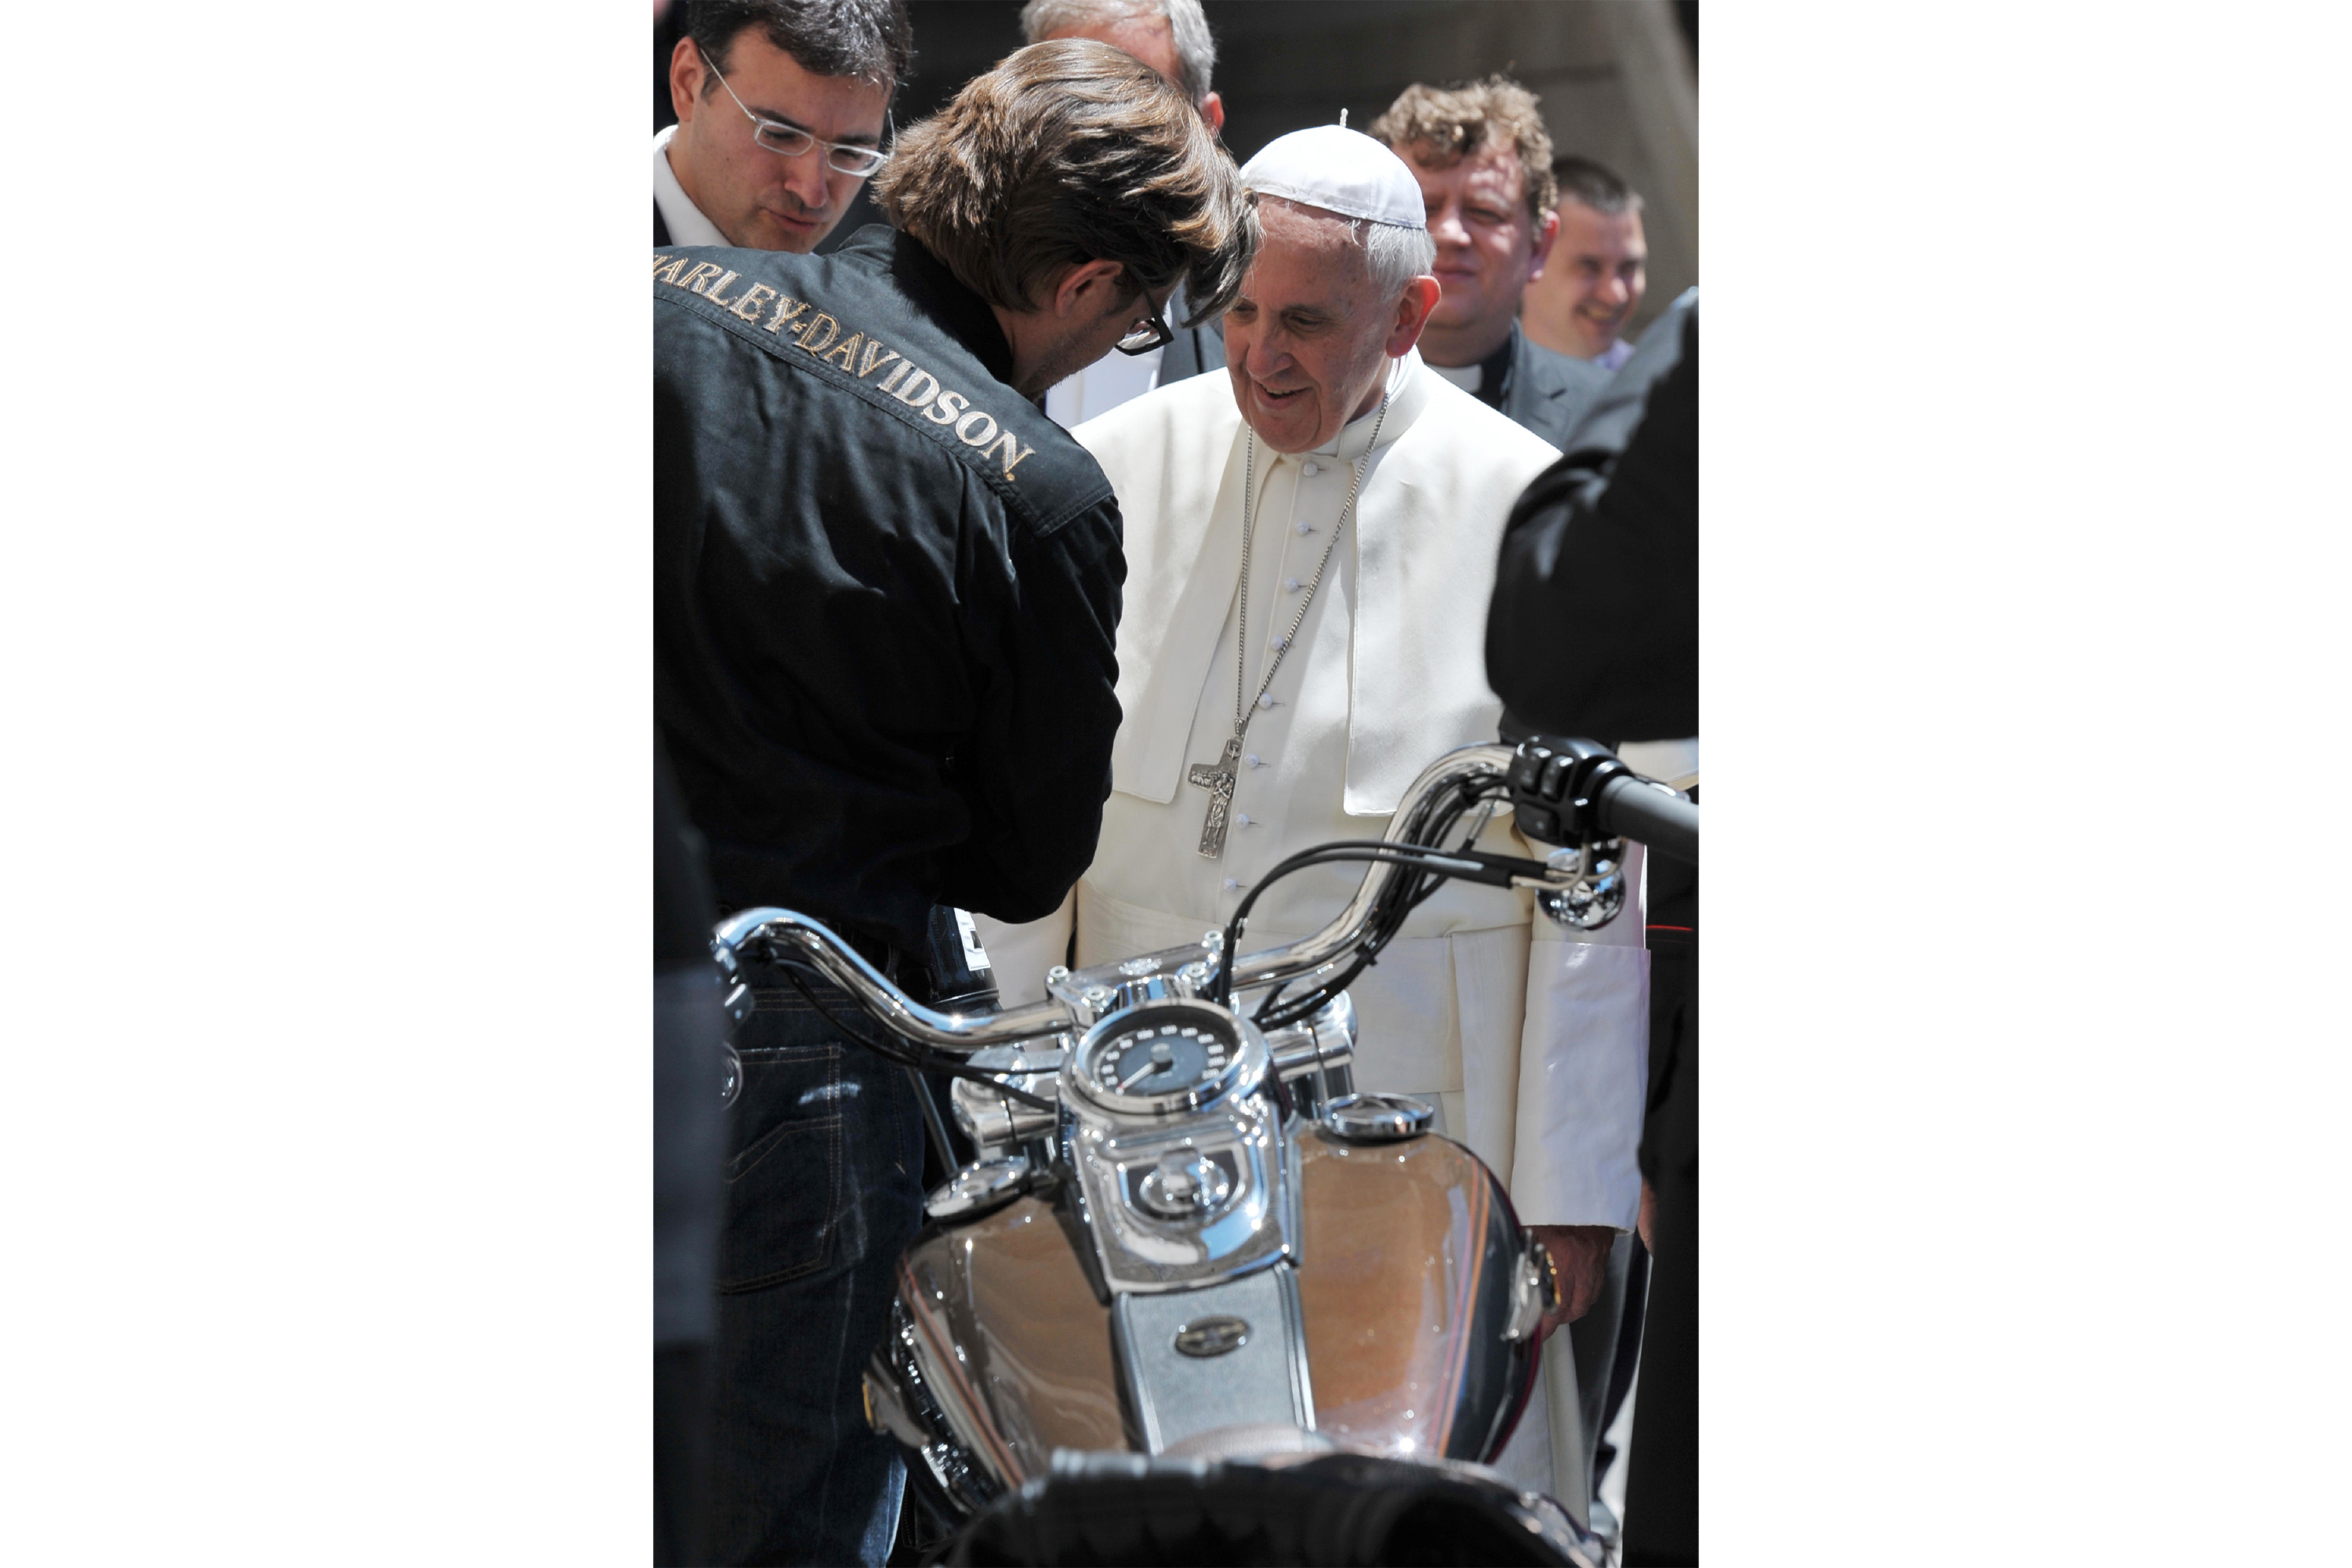 000_Par7583764 – Pope Francis – Harley Davidson motorcycle